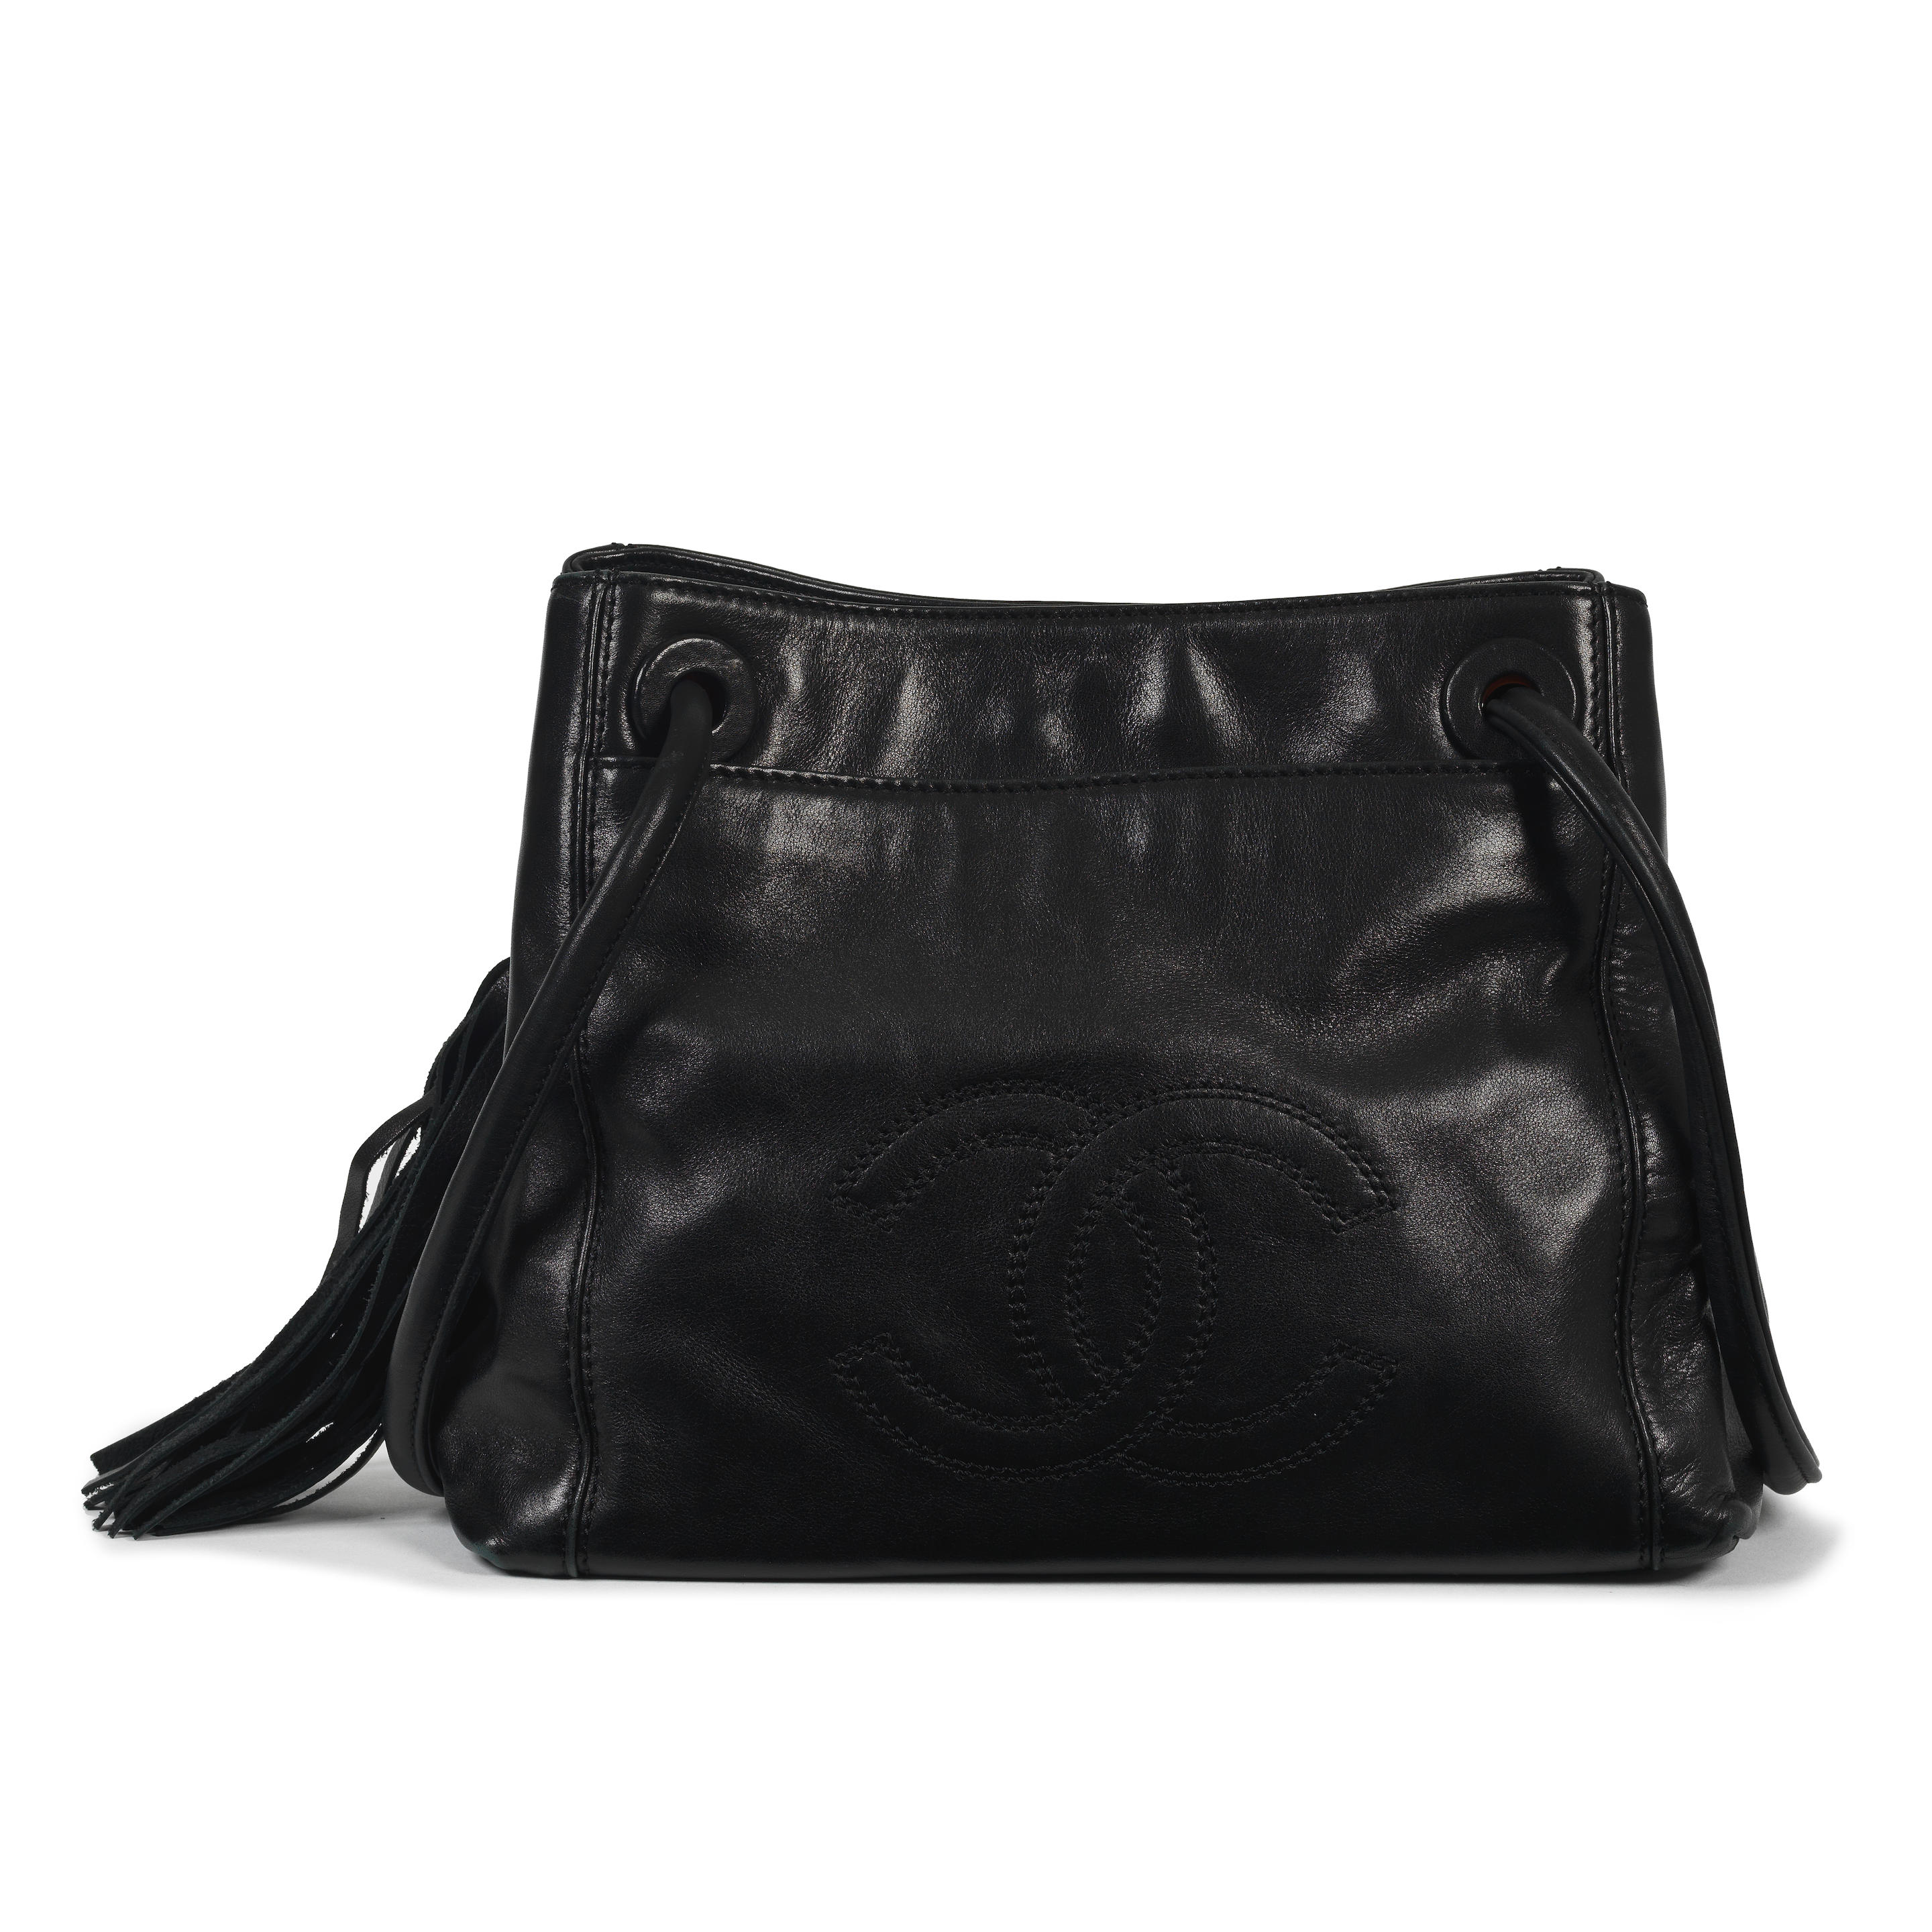 Sold at Auction: Karl Lagerfeld for Chanel Tortoise Shell Handbag